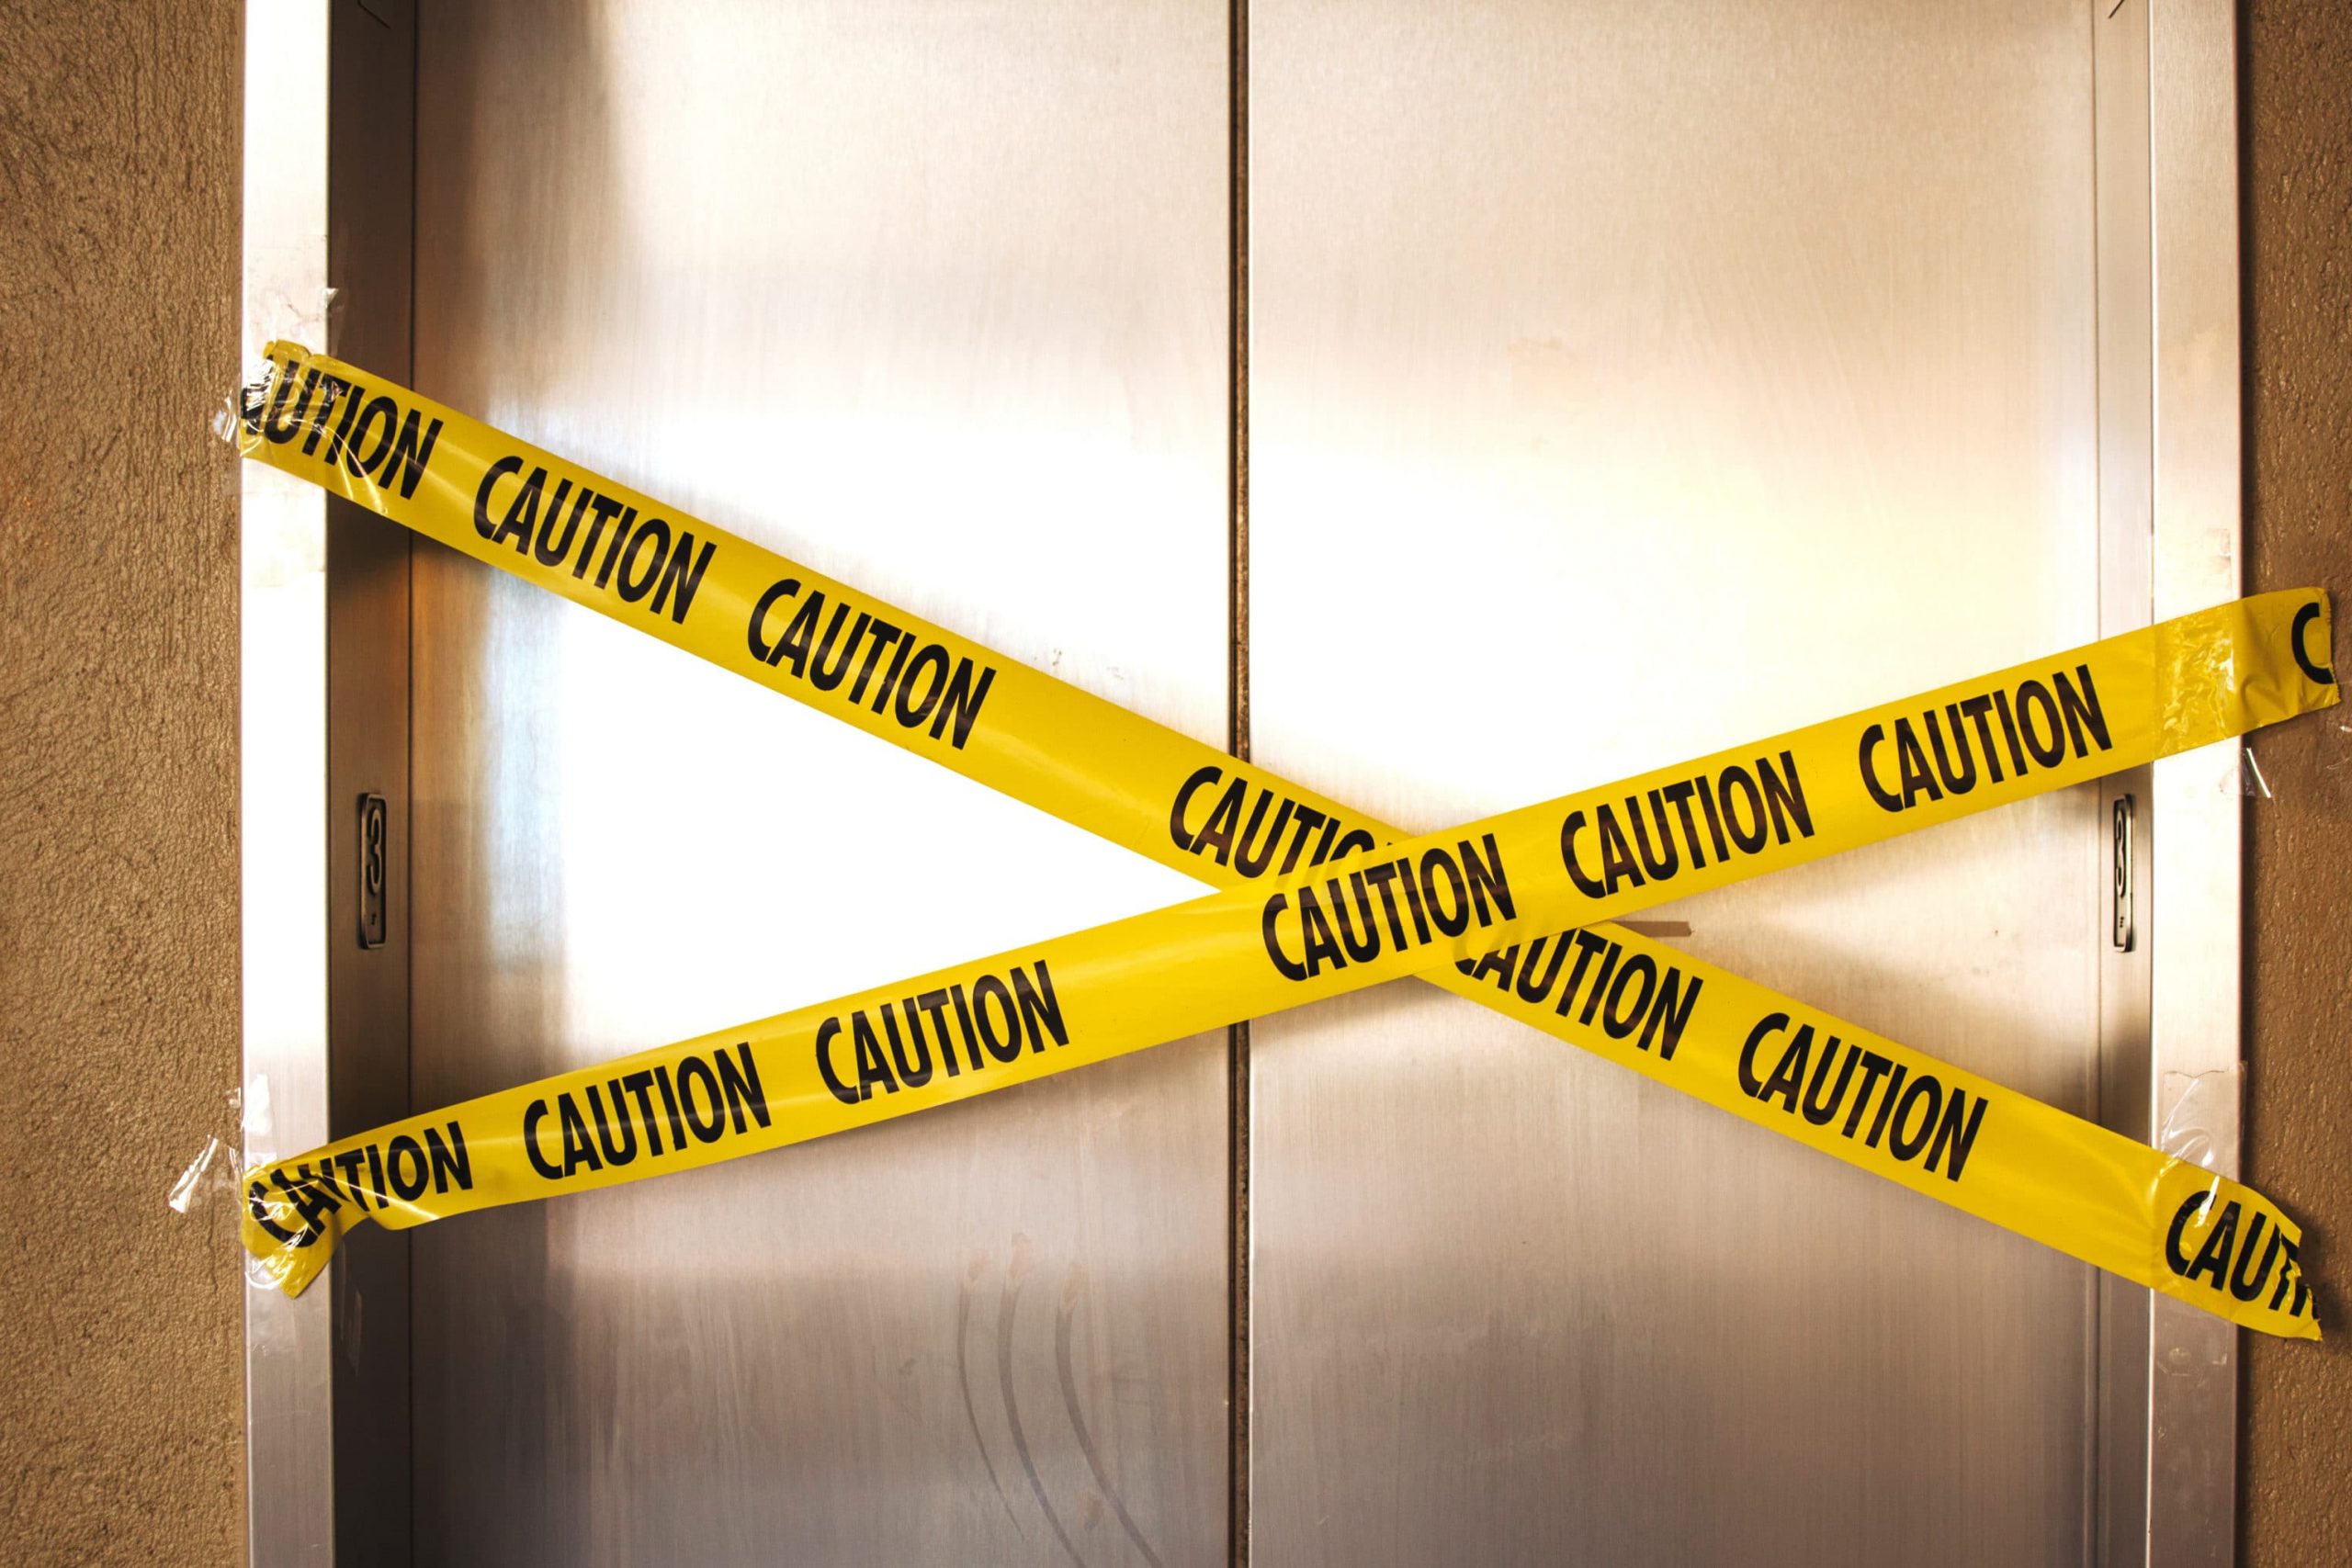 Should Home Elevators Be Recalled?